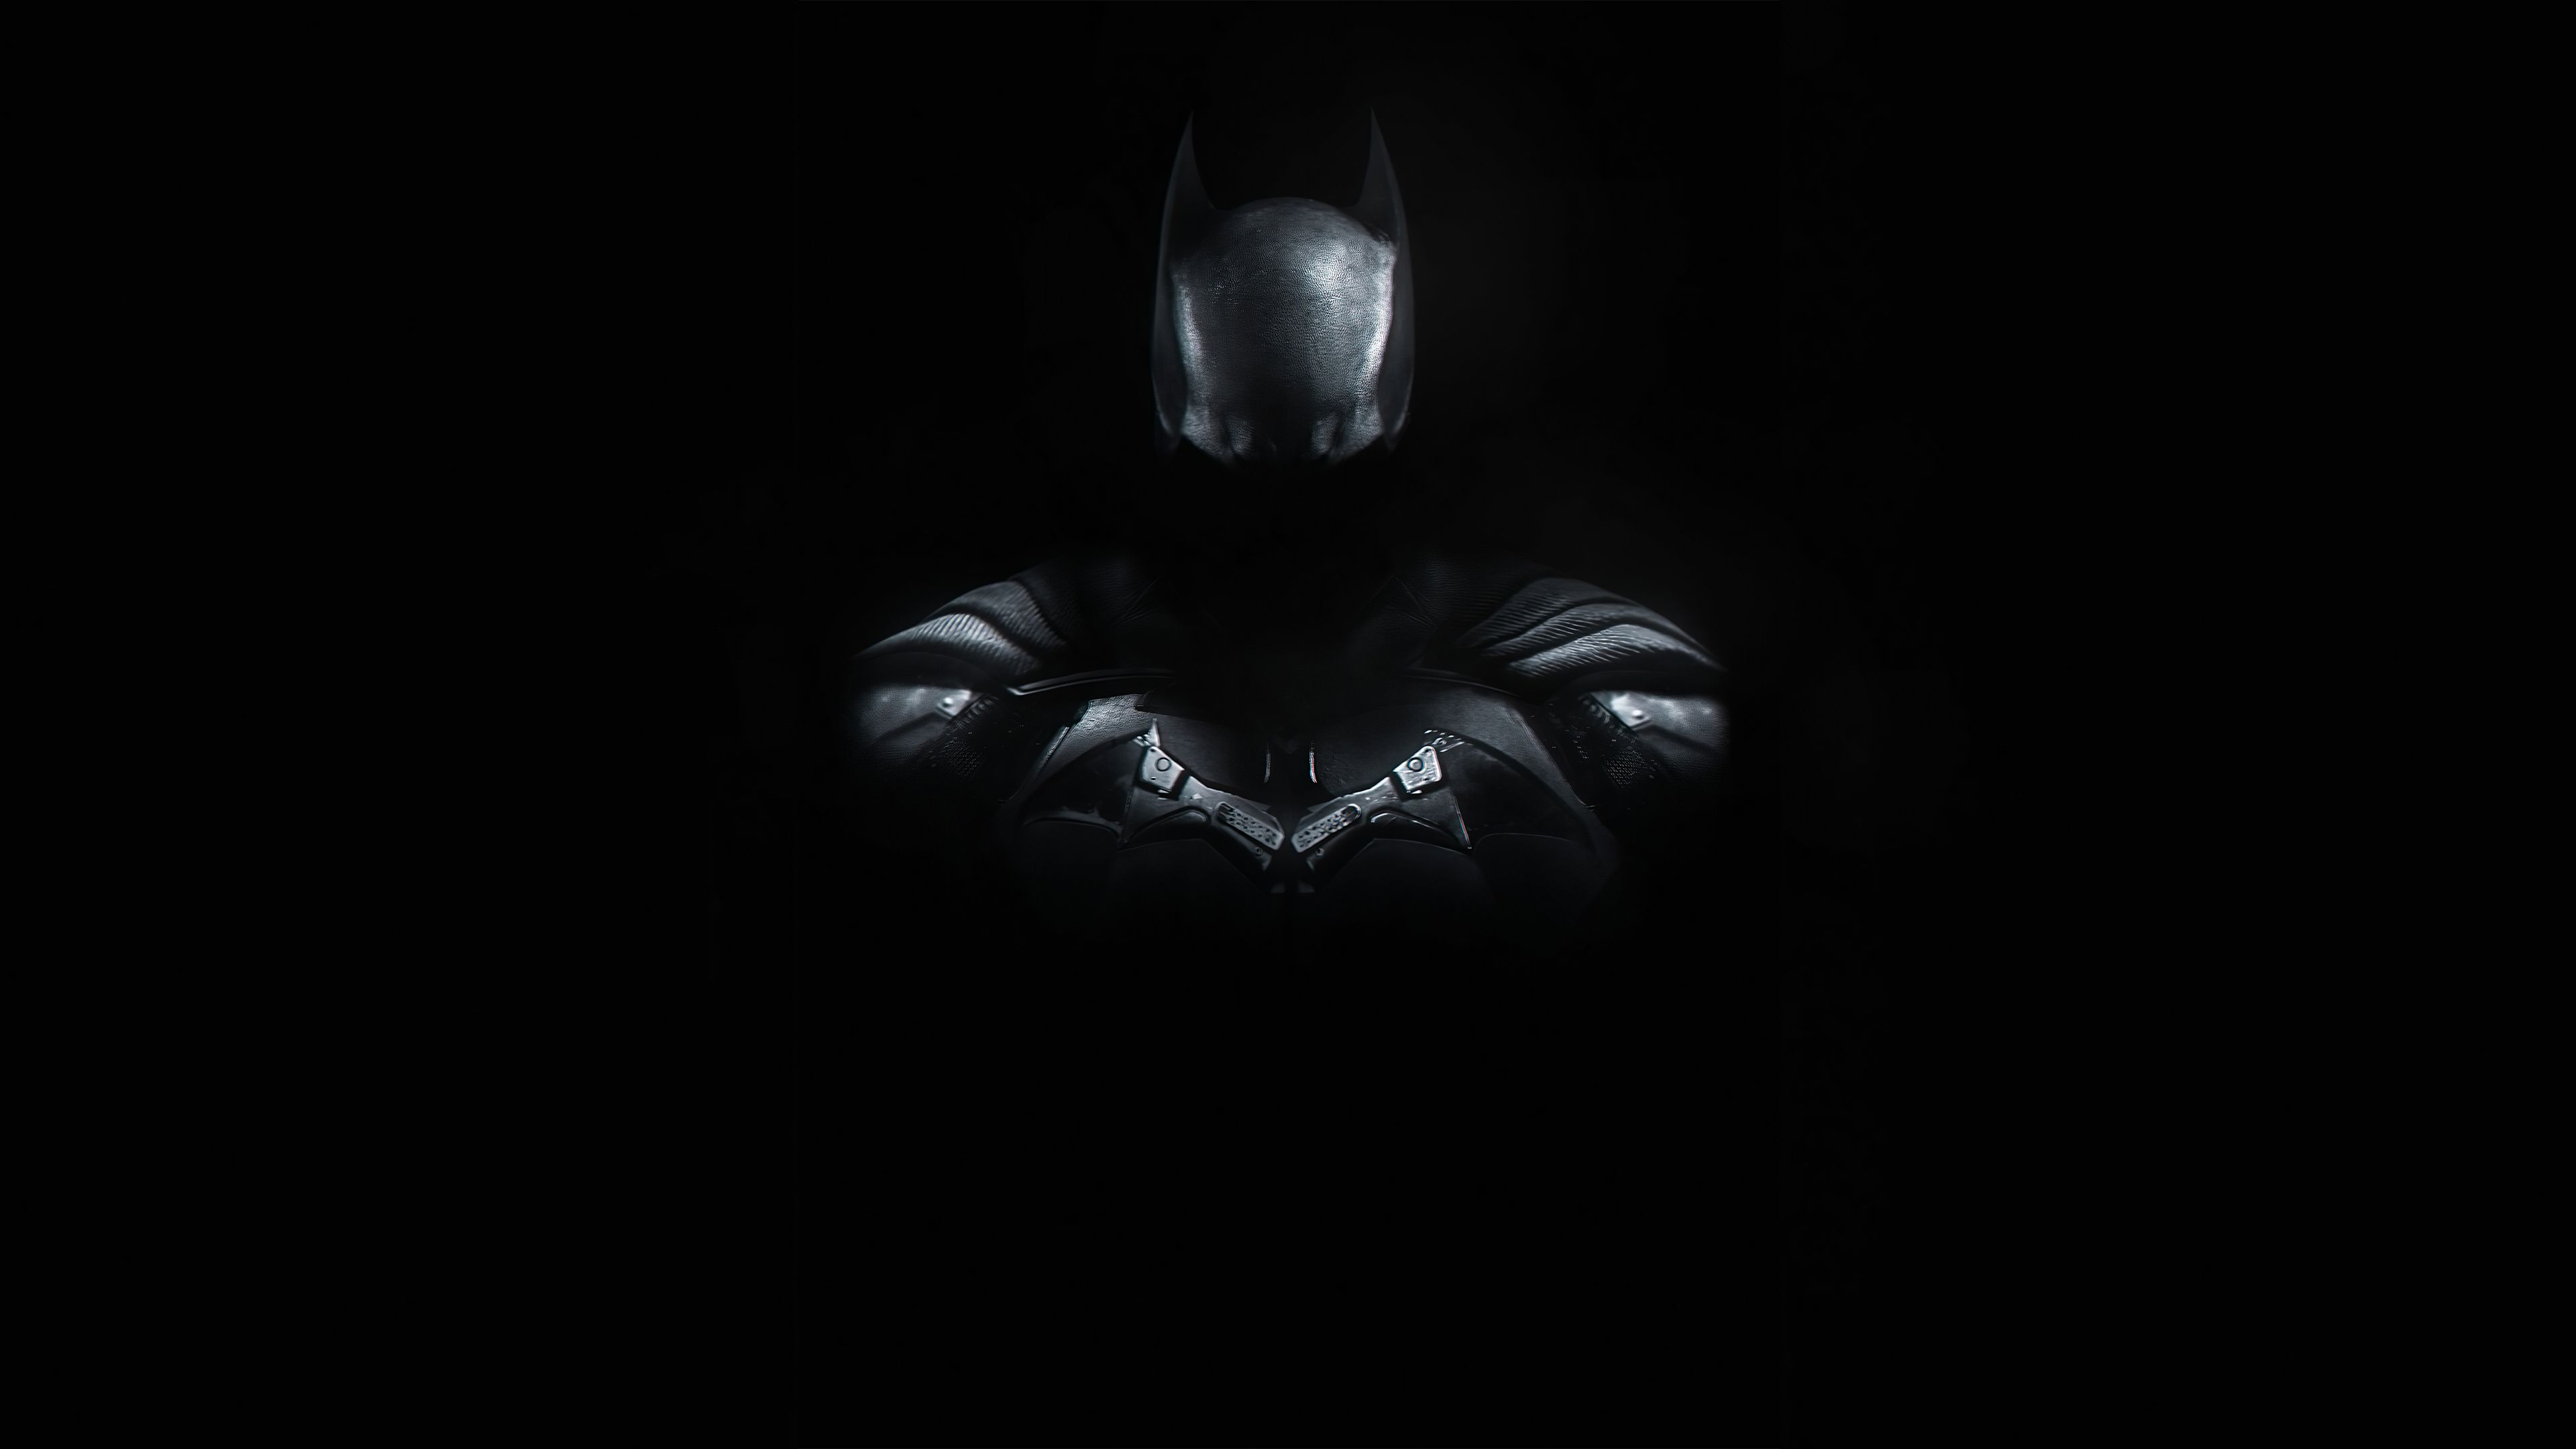 Batman Dark 4k, HD Superheroes, 4k Wallpaper, Image, Background, Photo and Picture